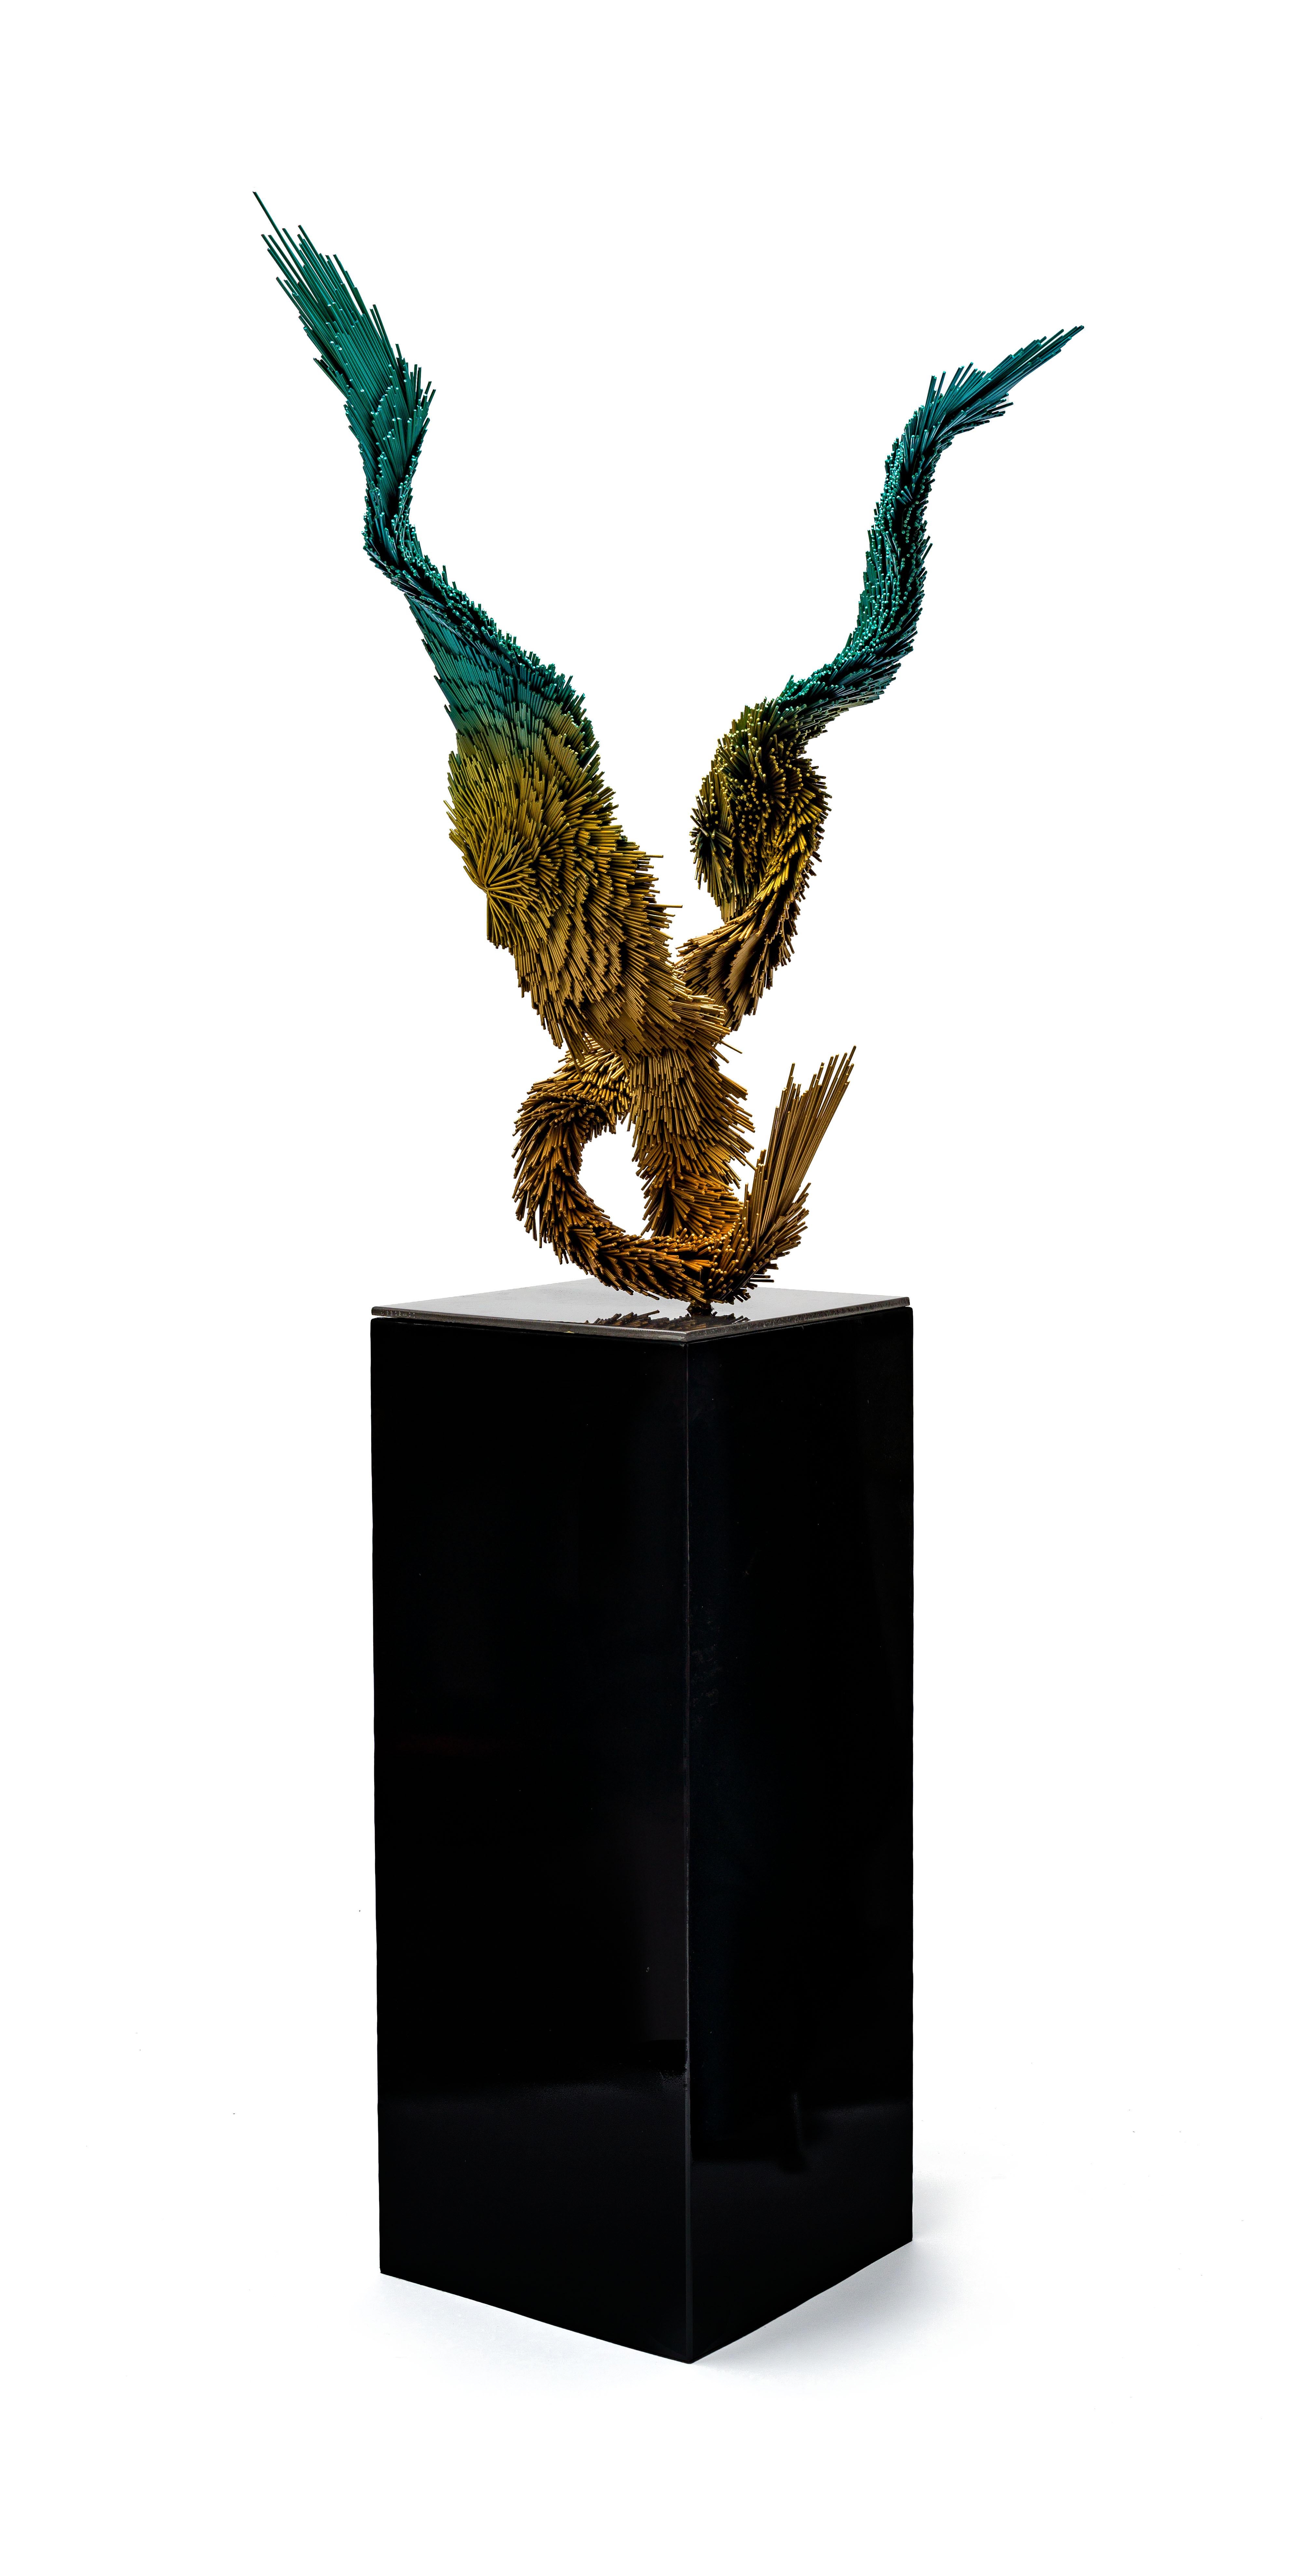 Figurative Sculpture Jake Michael Singer - Greene & Greene, Sculpture d'oiseau contemporaine en acier jaune et vert